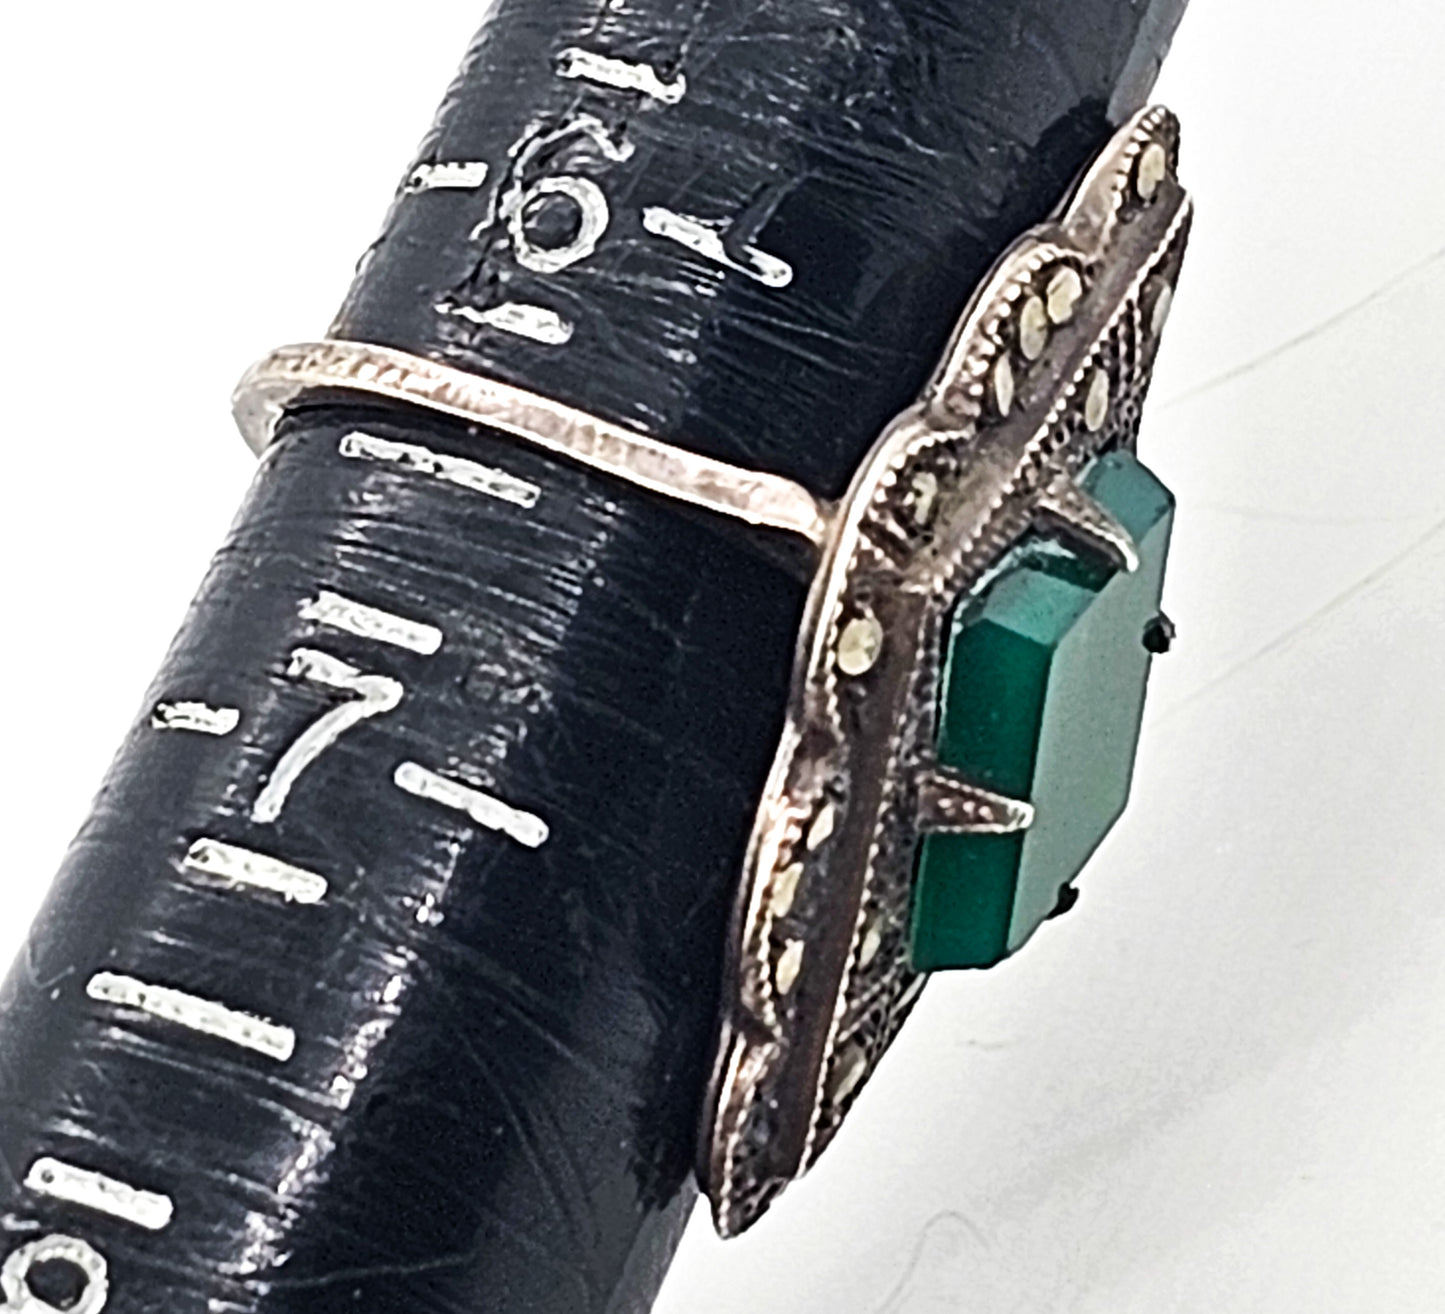 Chrysoprase green gem antique Art Deco Marcasite large sterling silver ring size 6.5